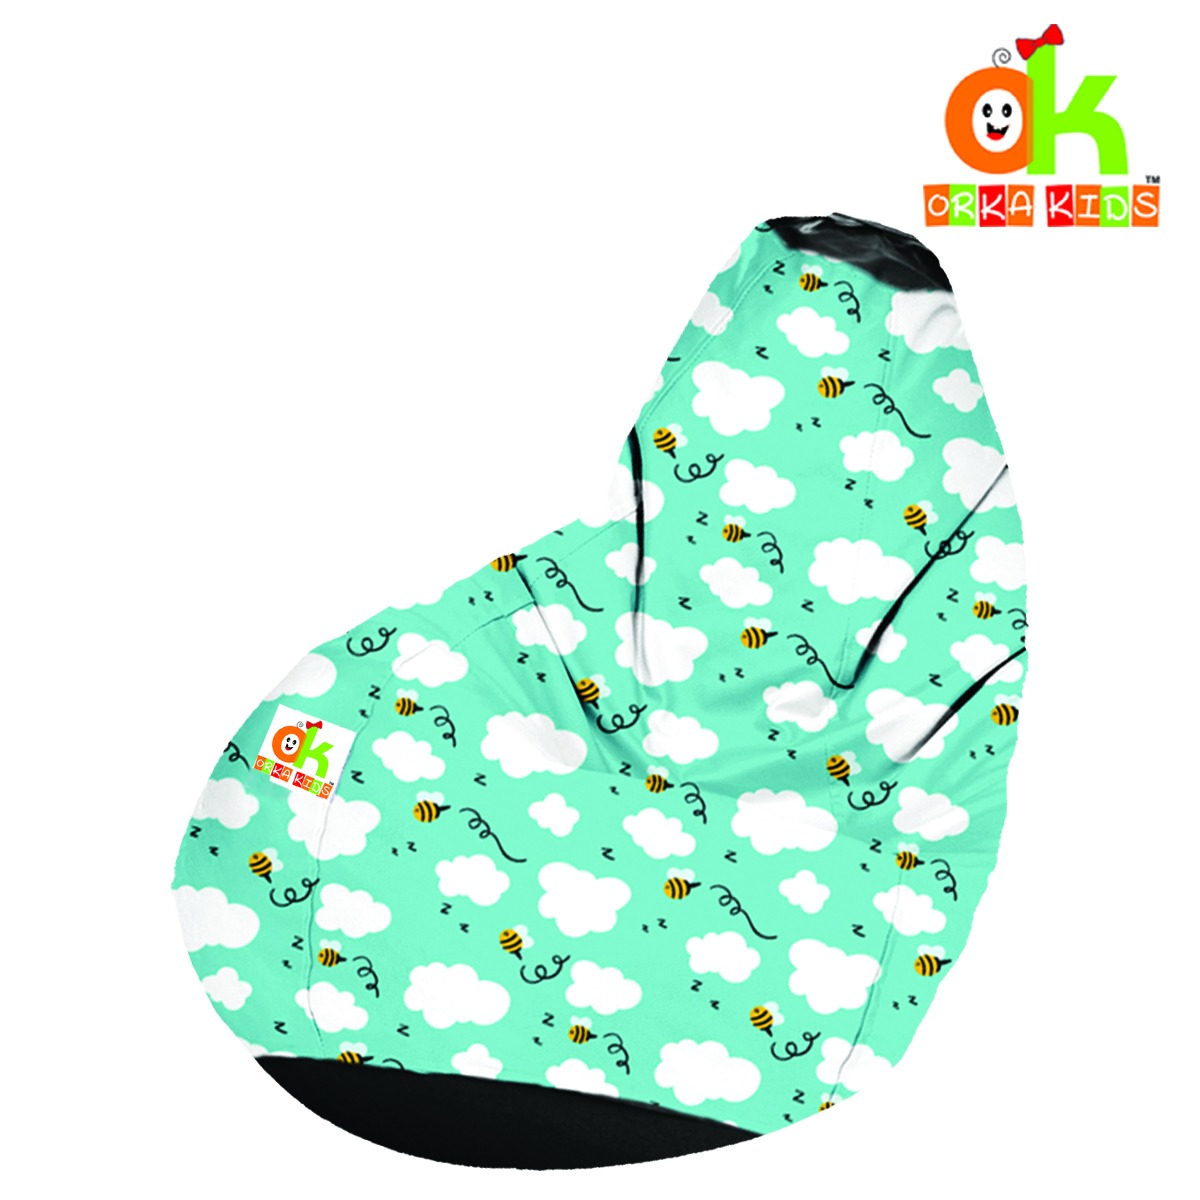 ORKA Kids Digital Printed6 Bean Bag With Beans Filled